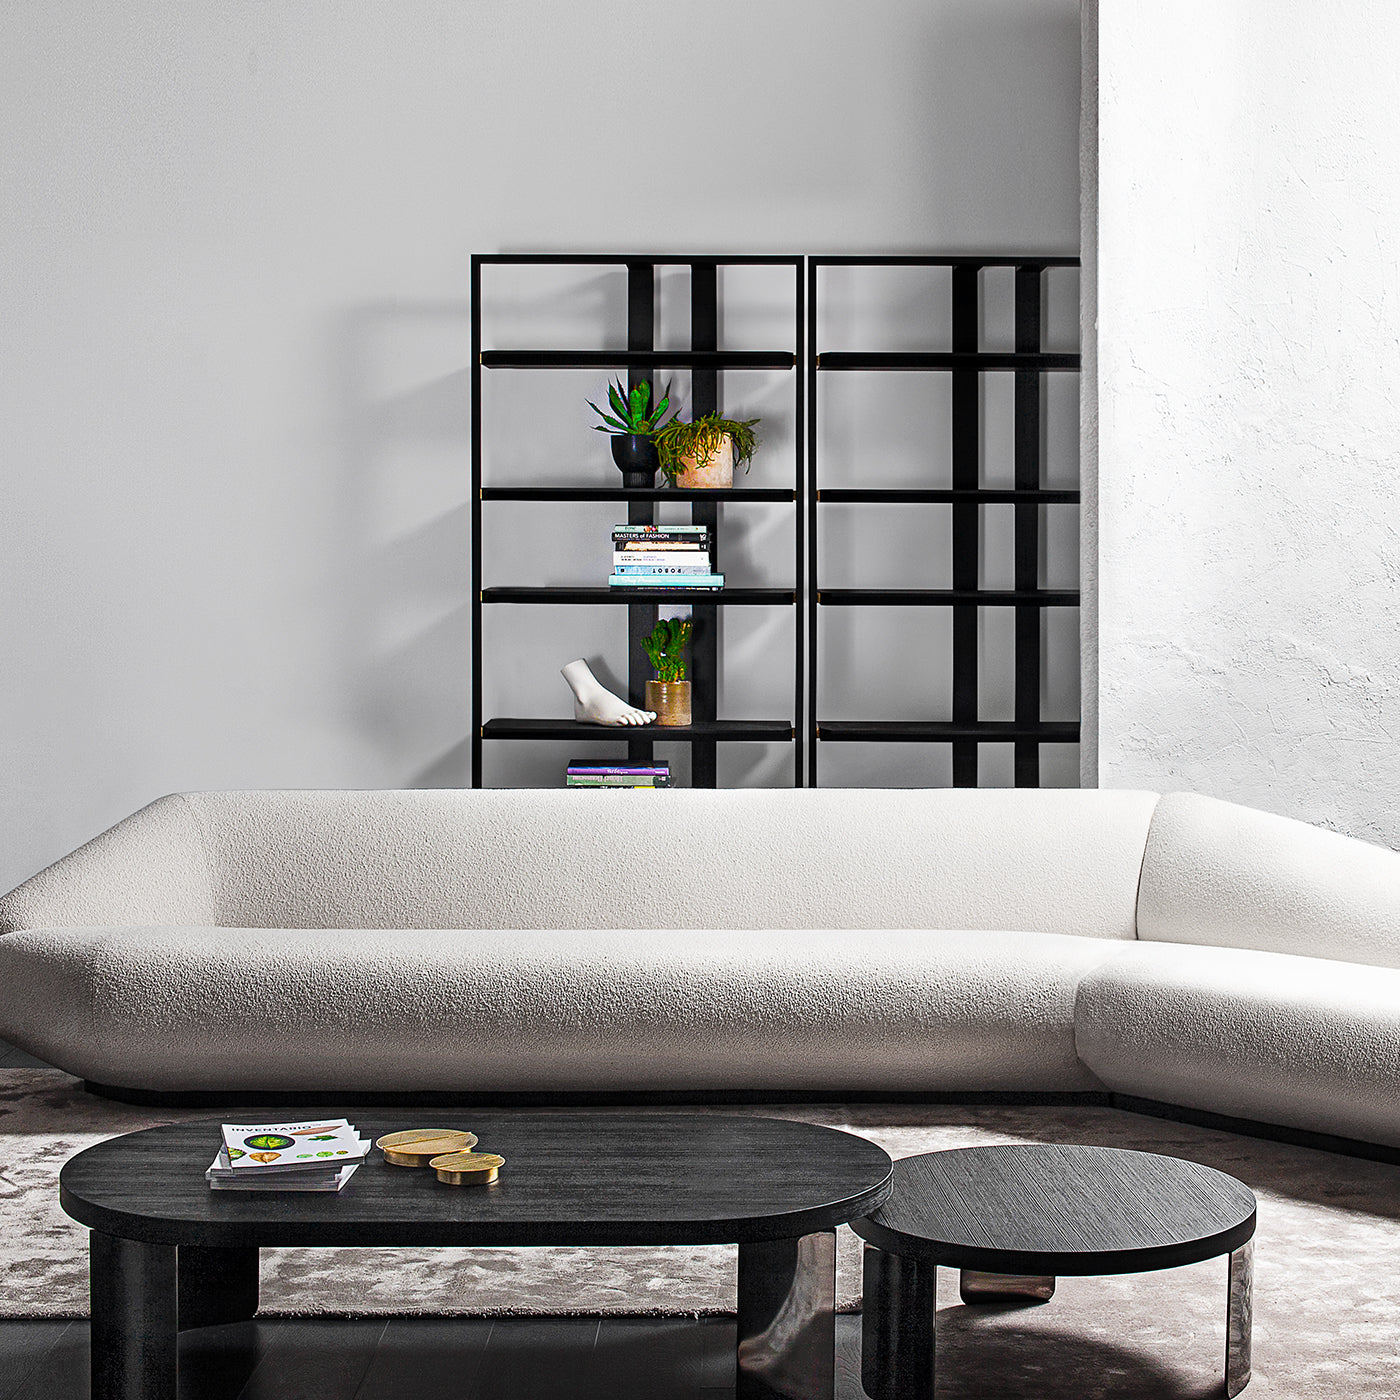 Bolid 370 Angular White Sofa by Gianluigi Landoni - Alternative view 1